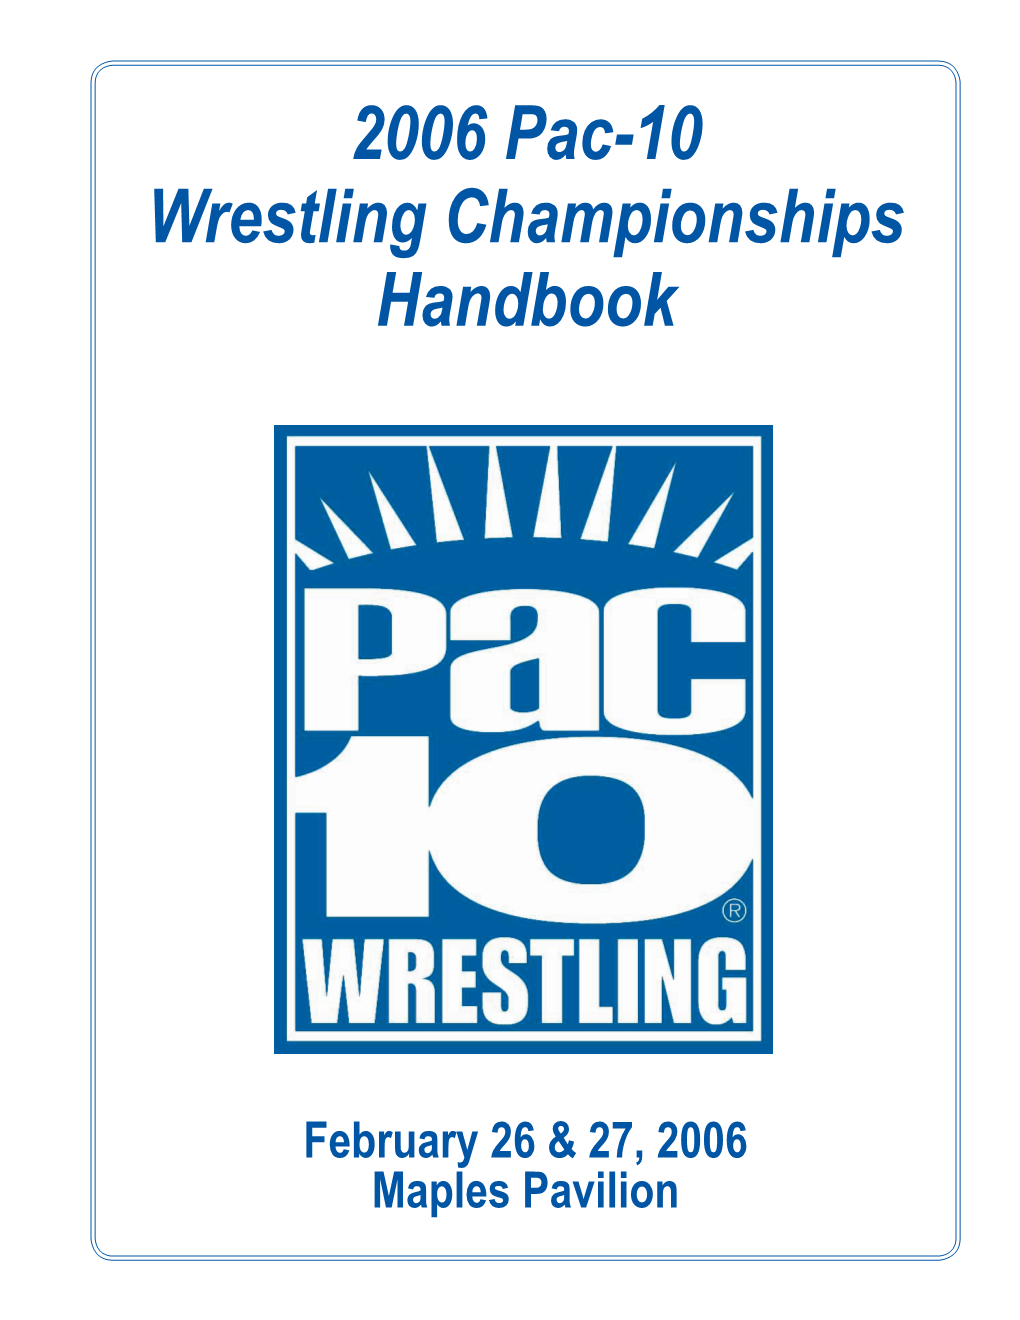 06Pac-10 Wrestling Manual